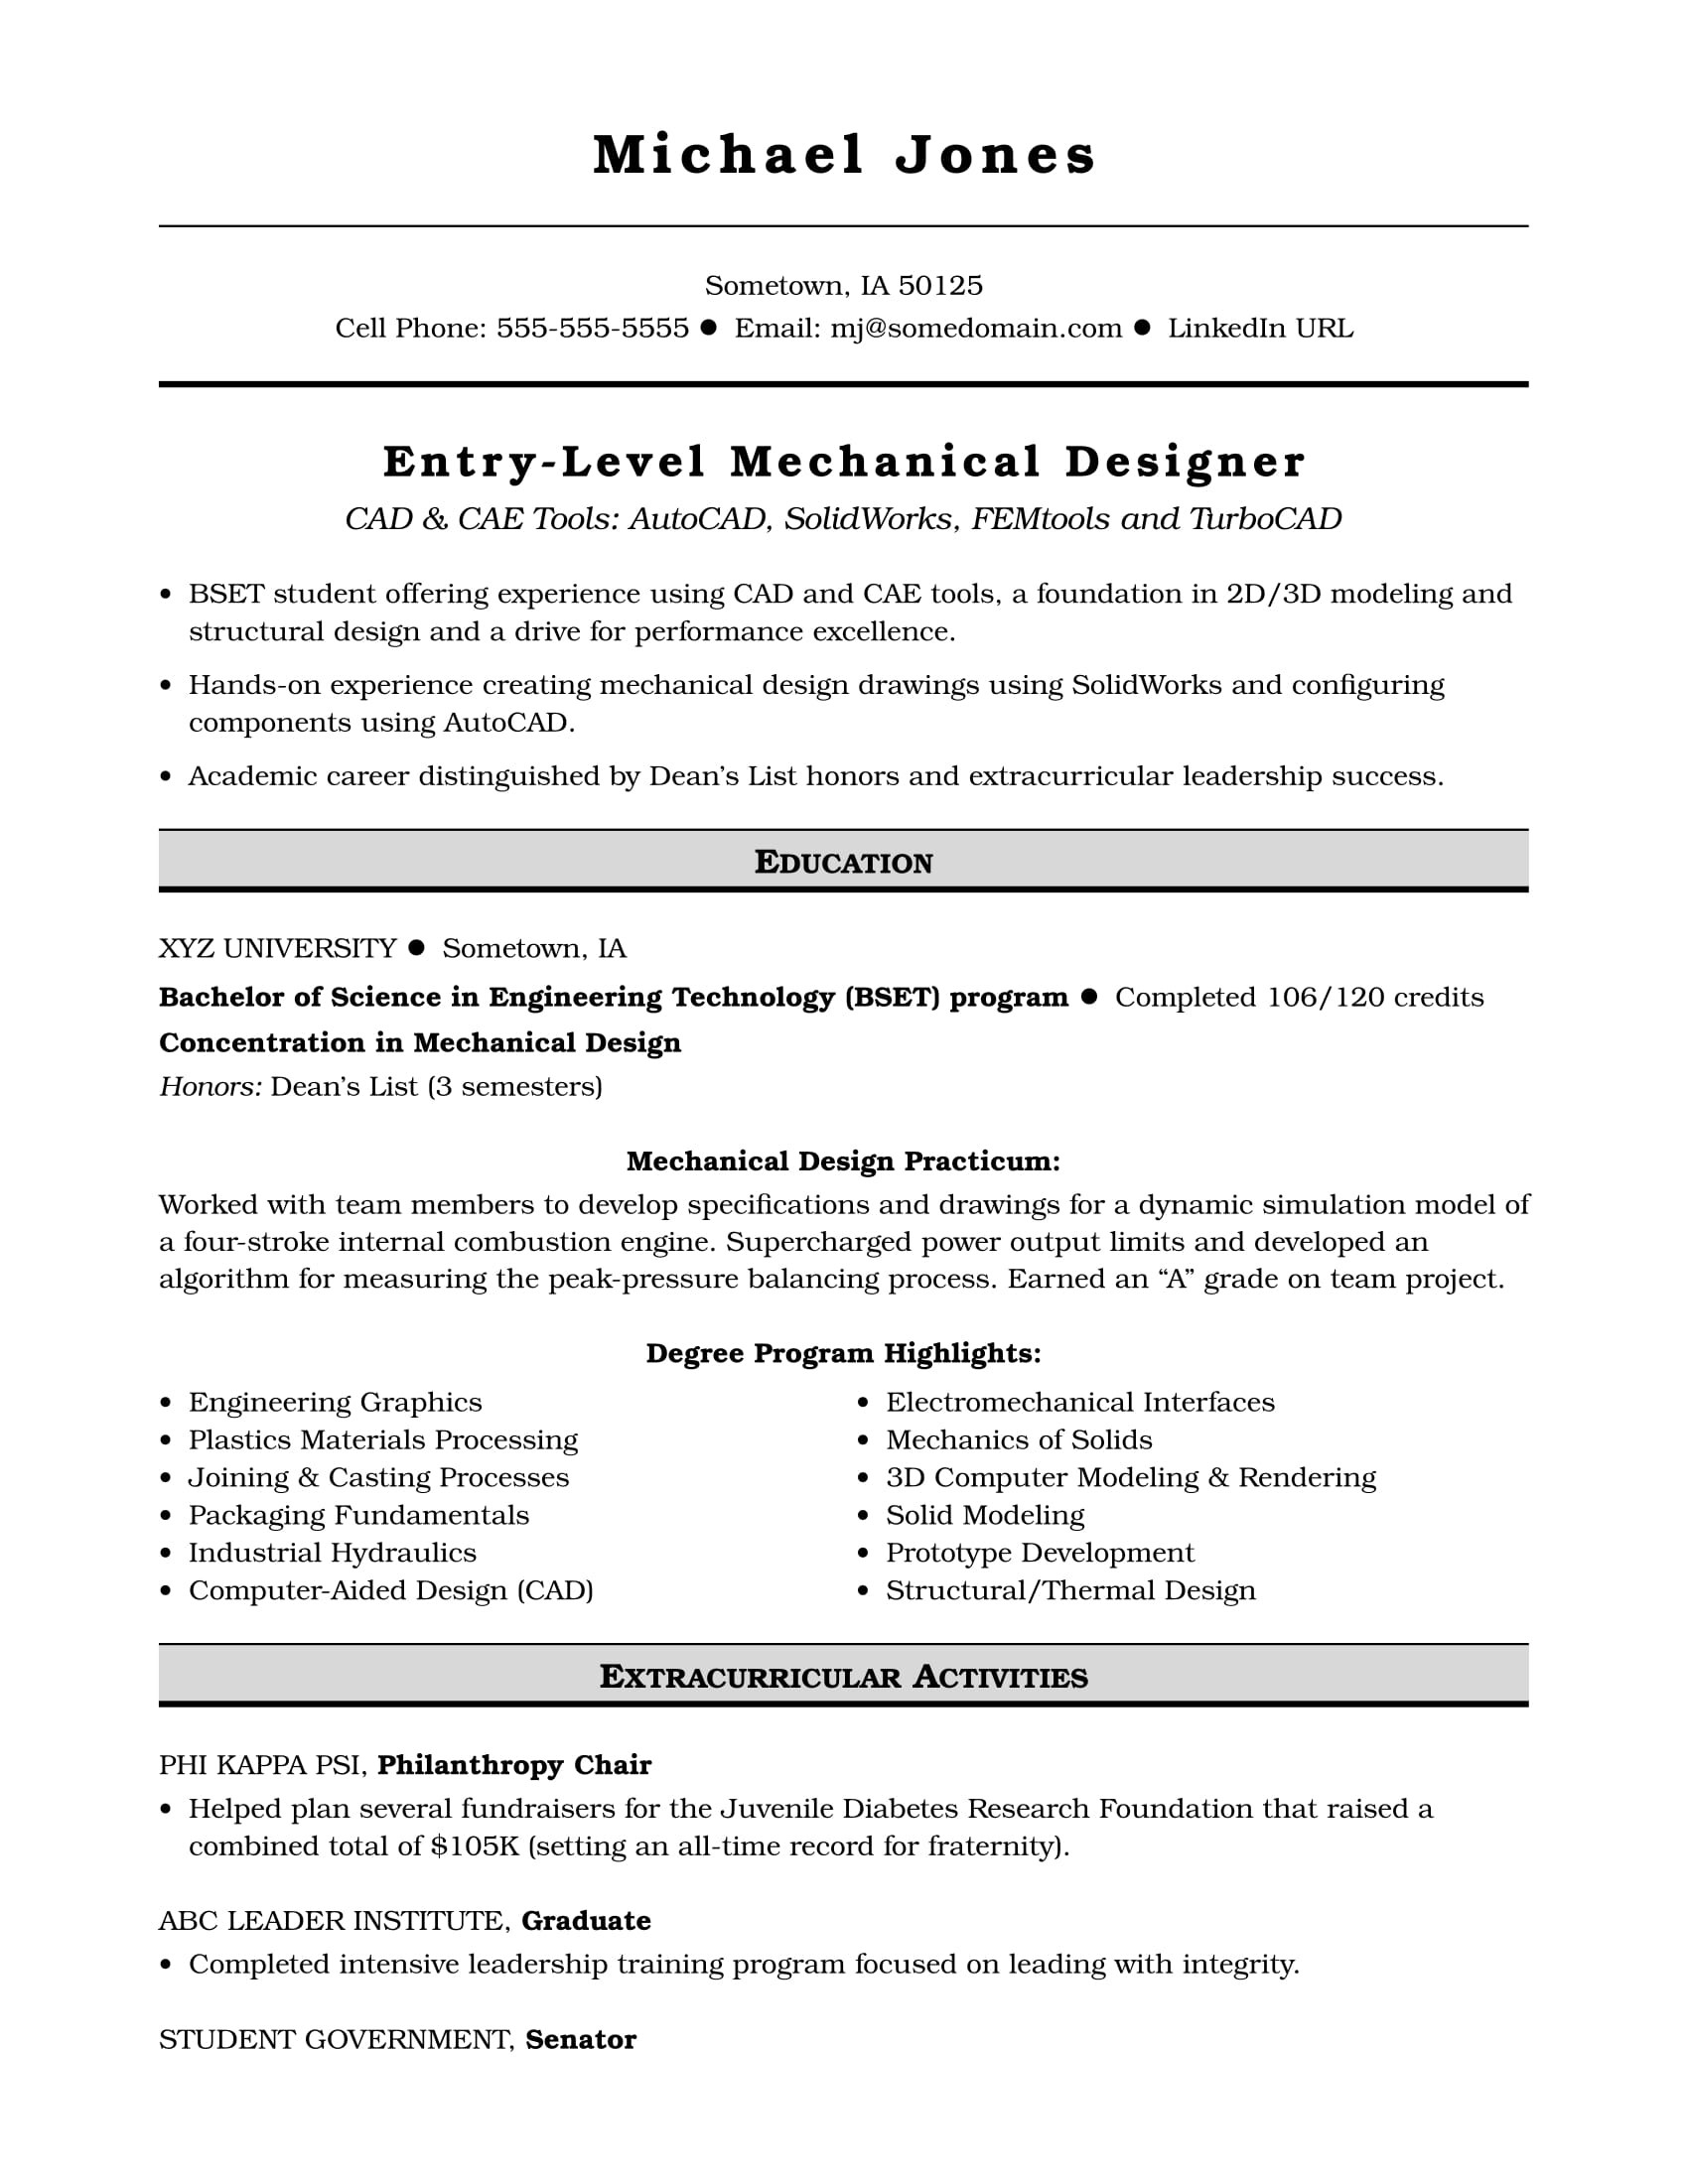 Resume Samples for Entry Level Engineers Sample Resume for An Entry-level Mechanical Designer Monster.com